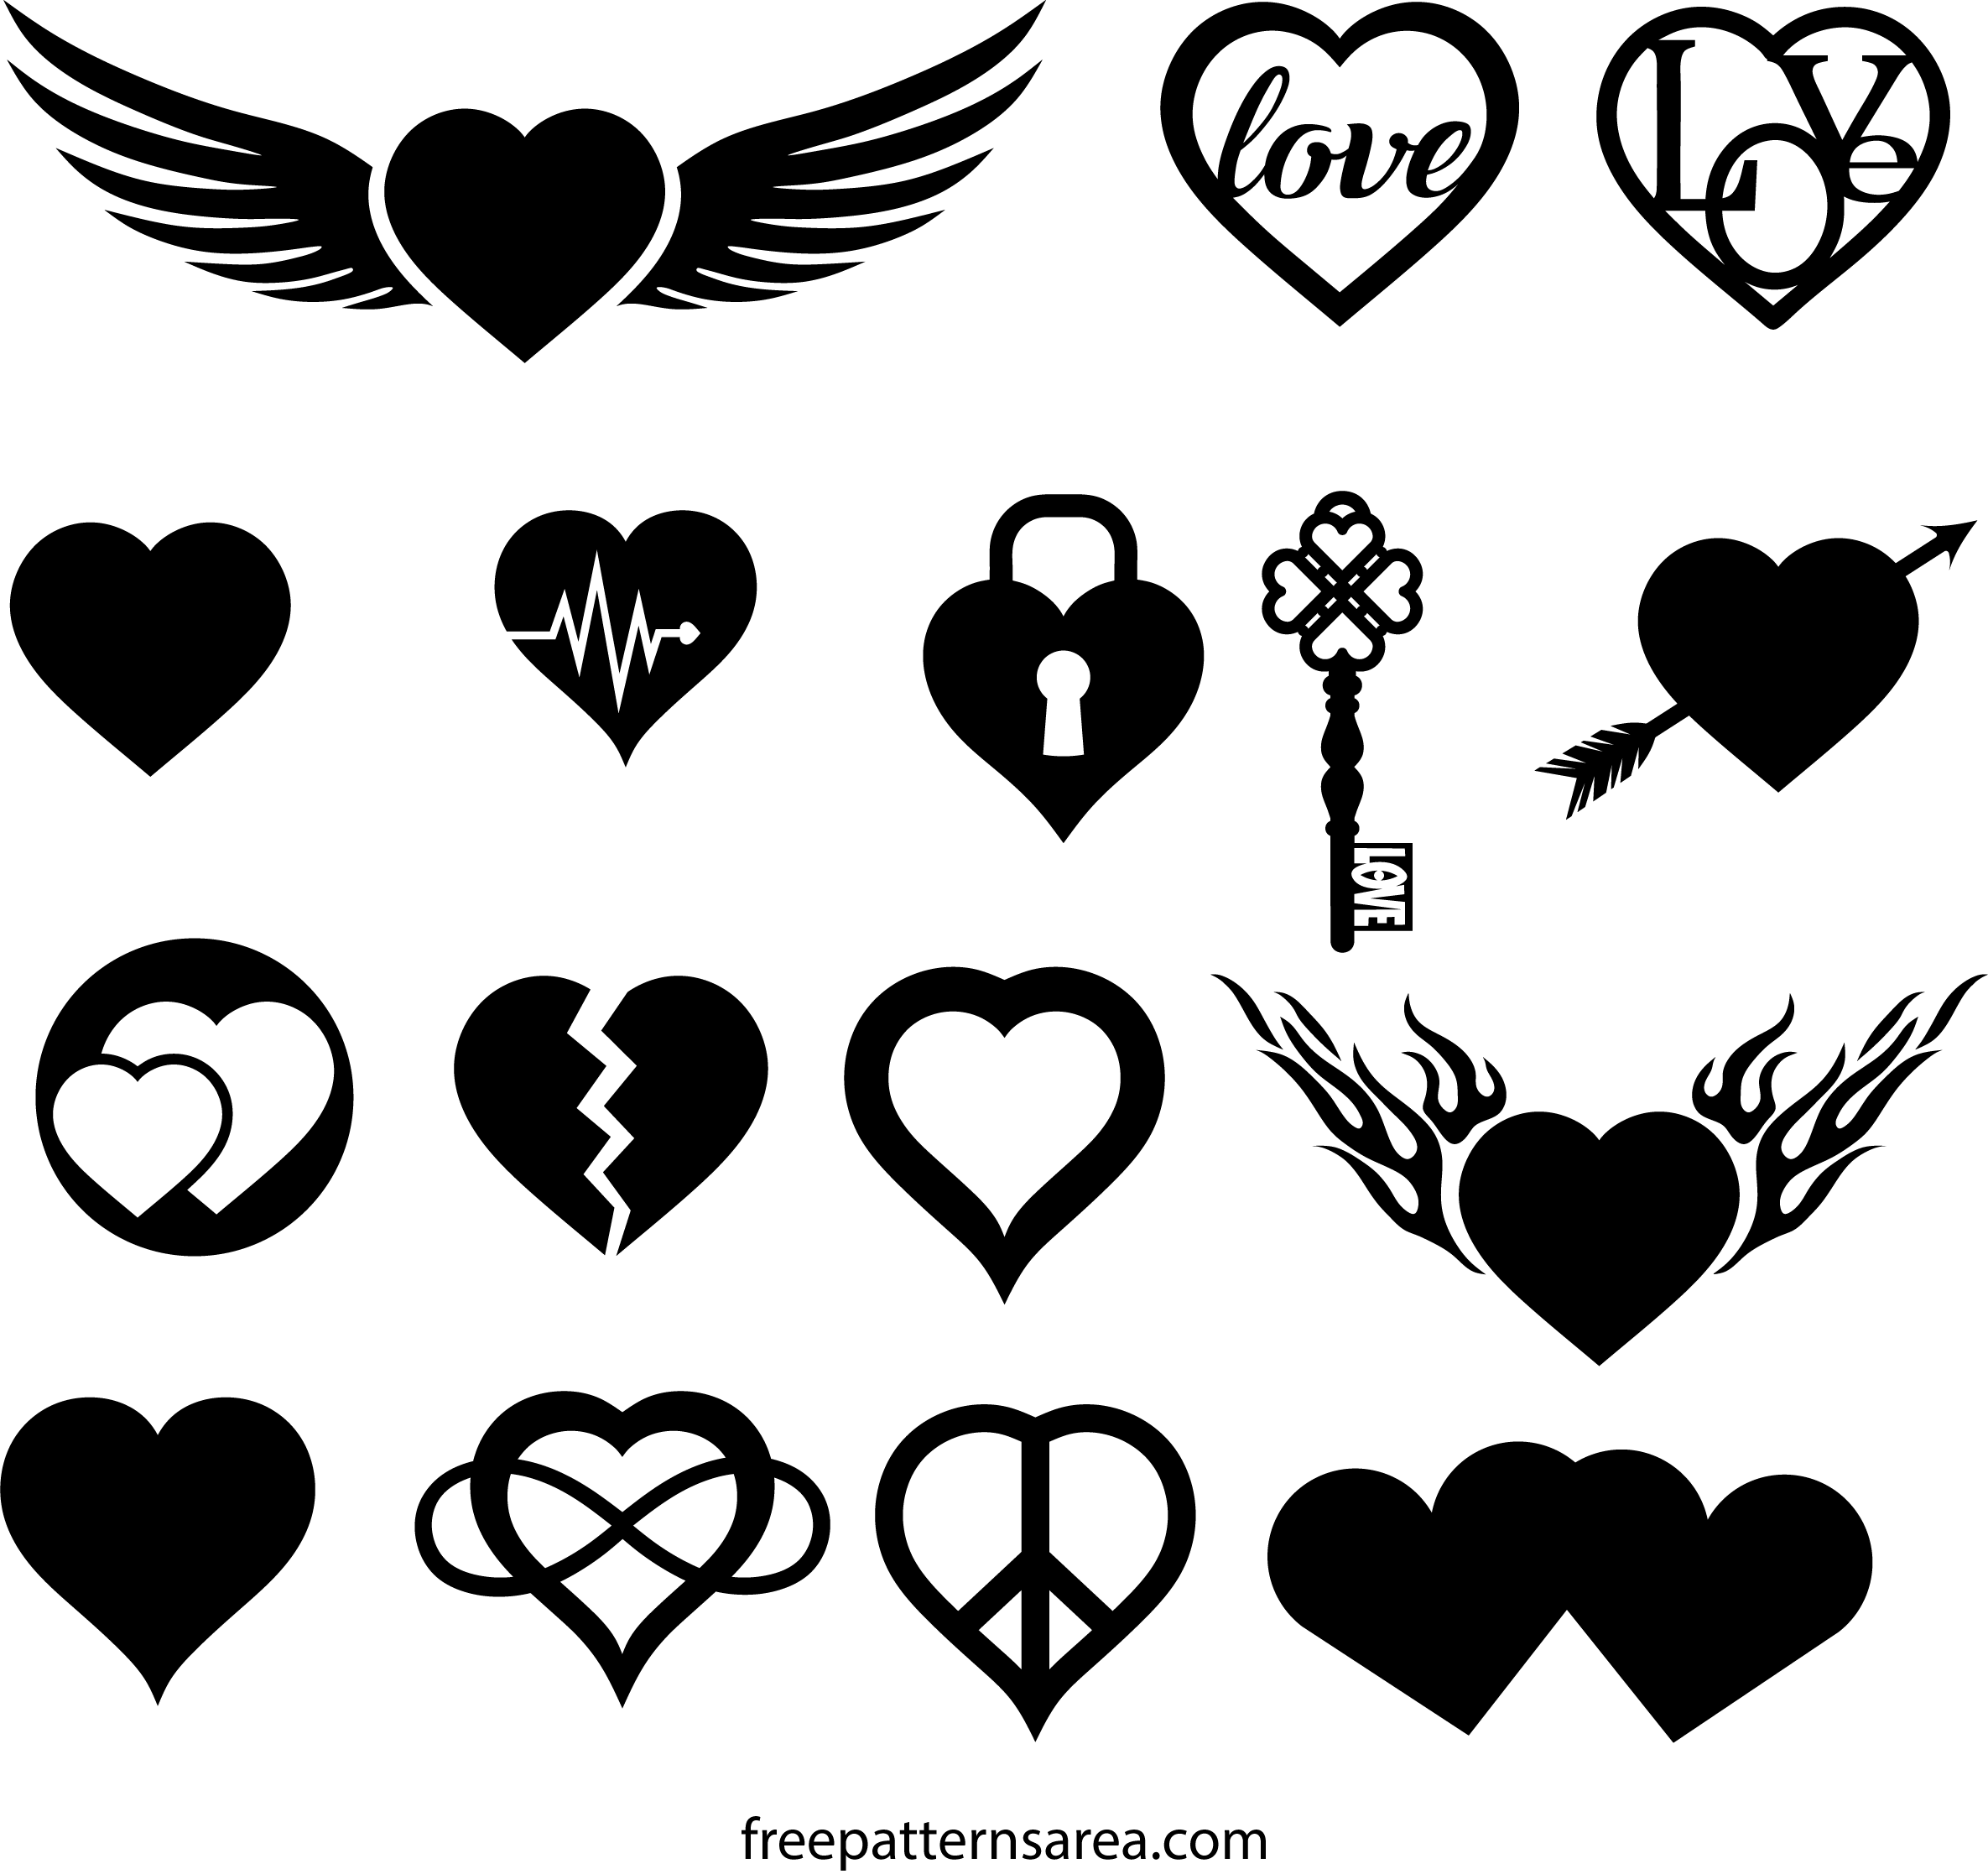 All Heart Logo - Free Love Heart Symbol Vectors